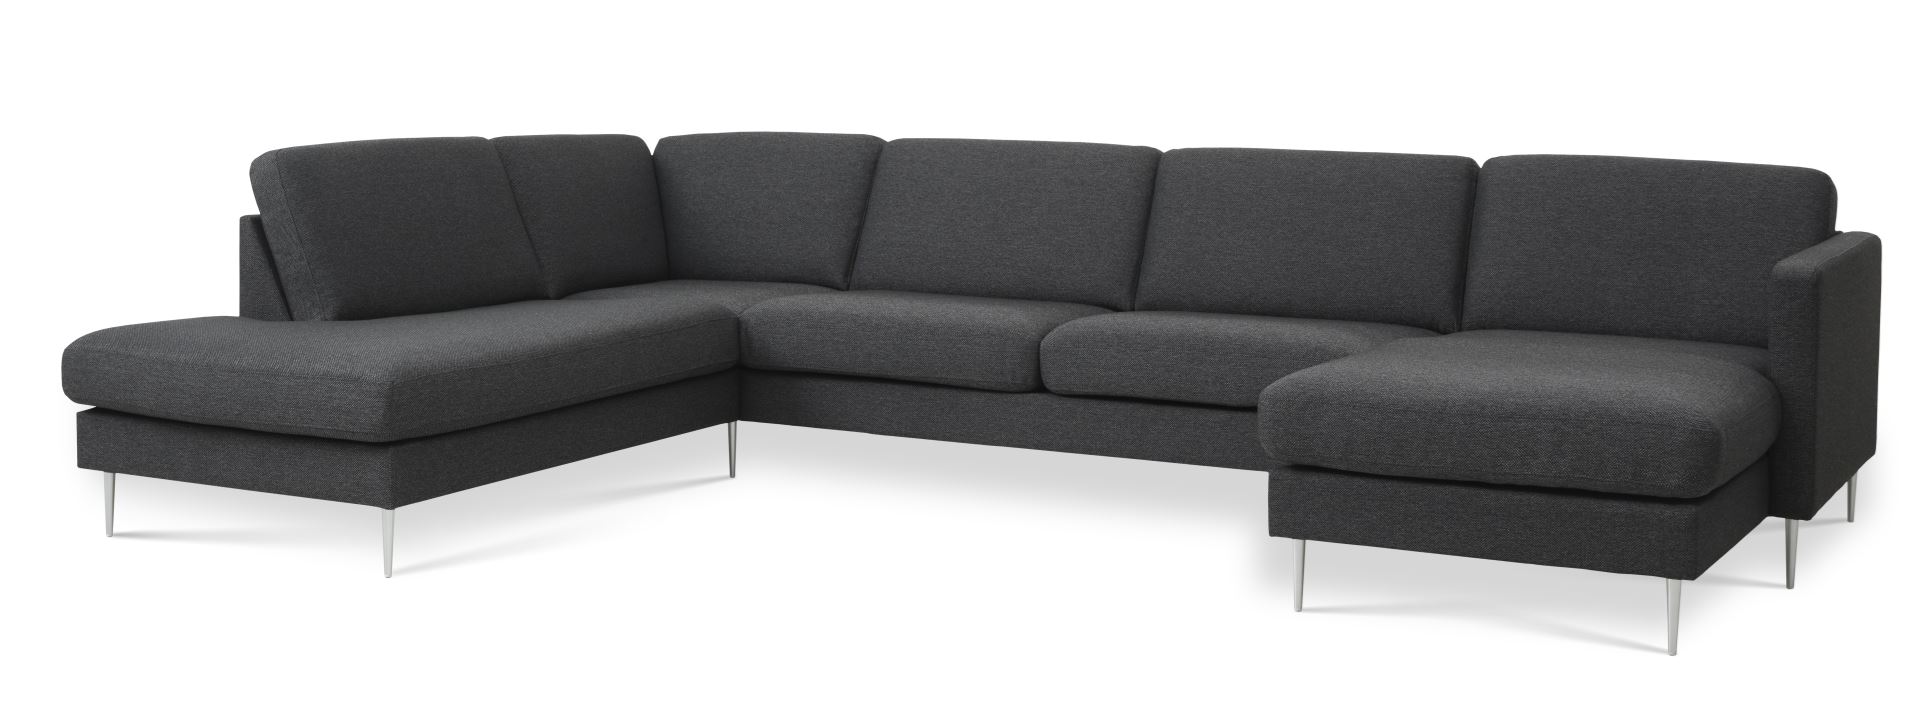 Ask sæt 54 U OE sofa, m. venstre chaiselong - antracitgrå polyester stof og børstet aluminium